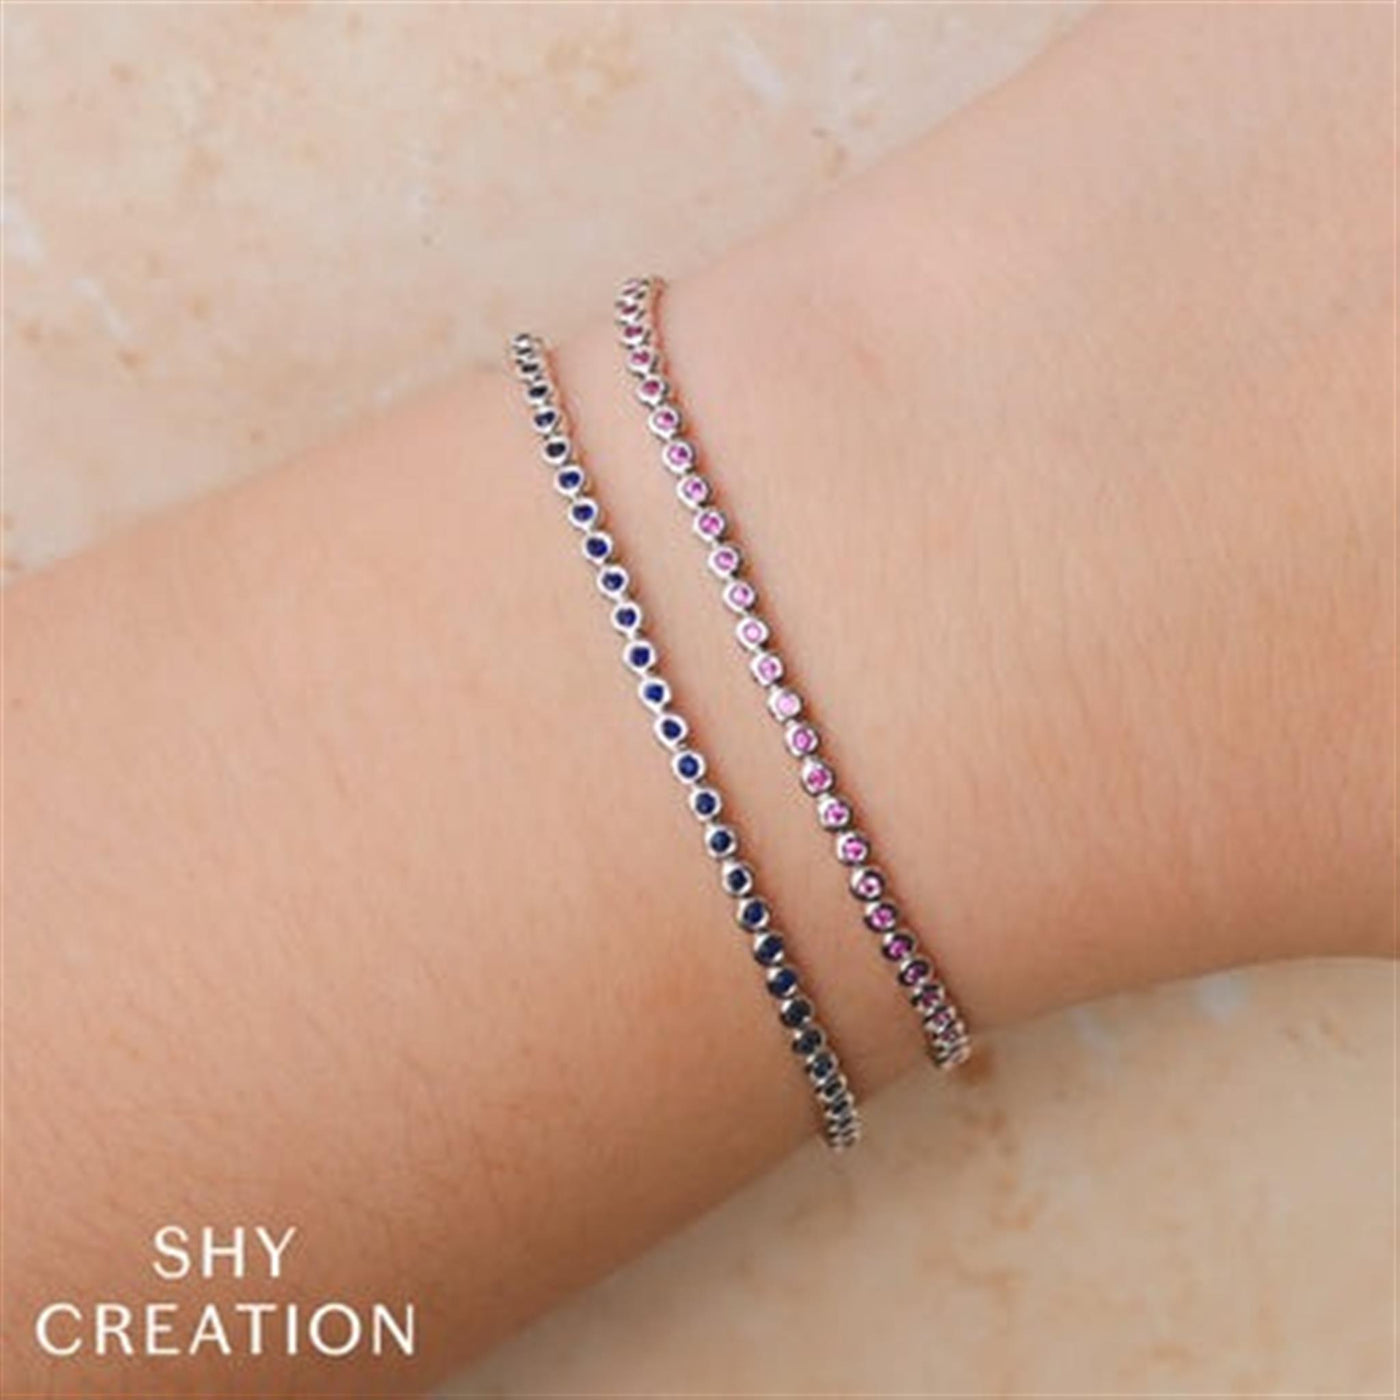 Shy Creation 14K White Gold 7" Bezel Set Tennis Style Bracelet Featuring Pink Sapphires